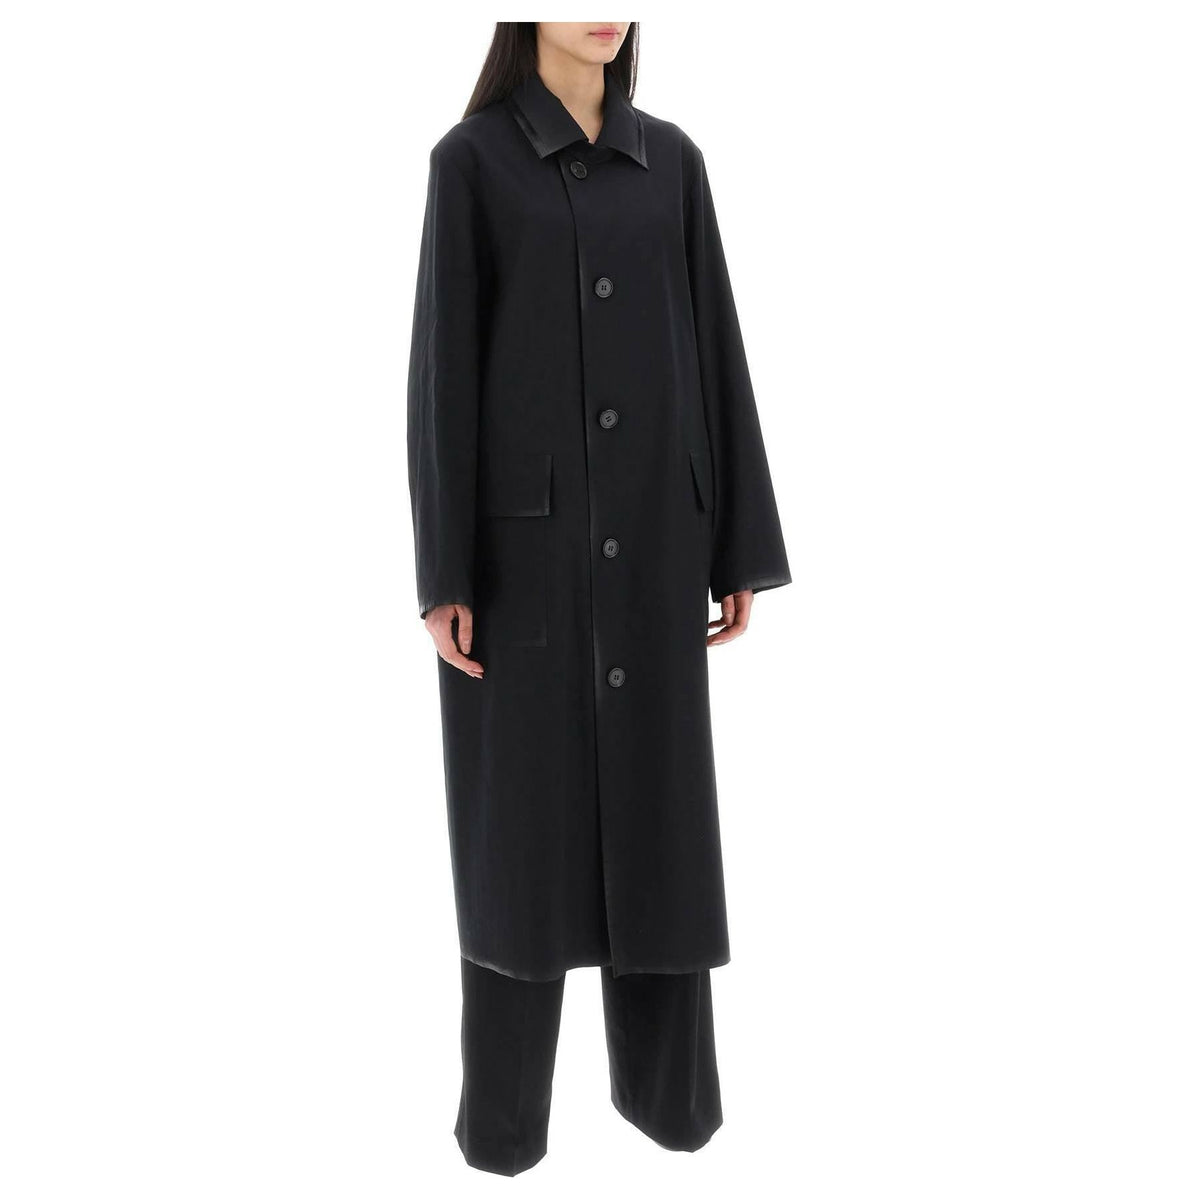 MAISON MARGIELA - Black Cotton Coat With Laminated Trim Details - JOHN JULIA